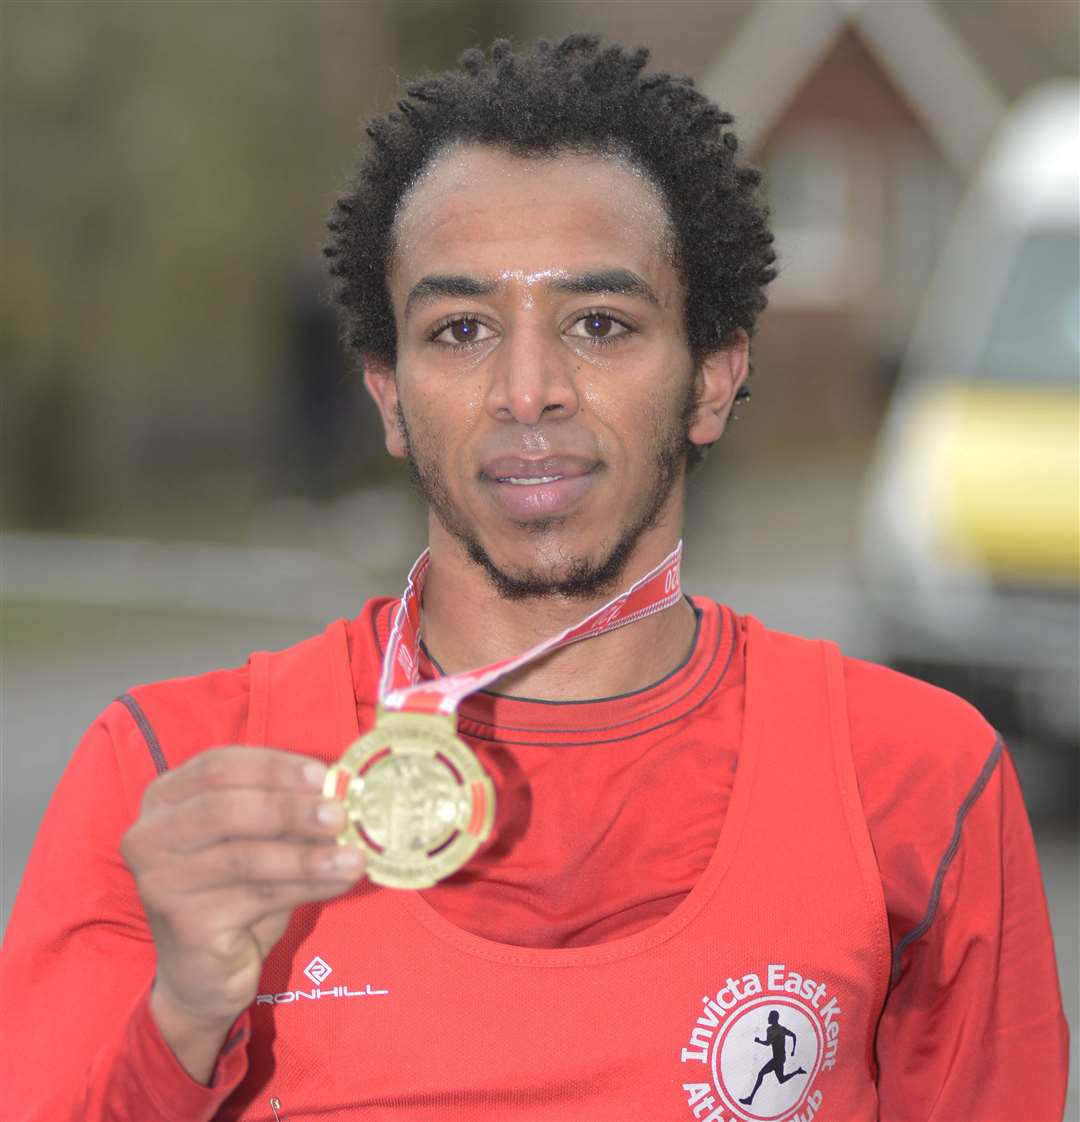 Canterbury 10 mile road race winner Abel Tsegay .Picture: Paul Amos